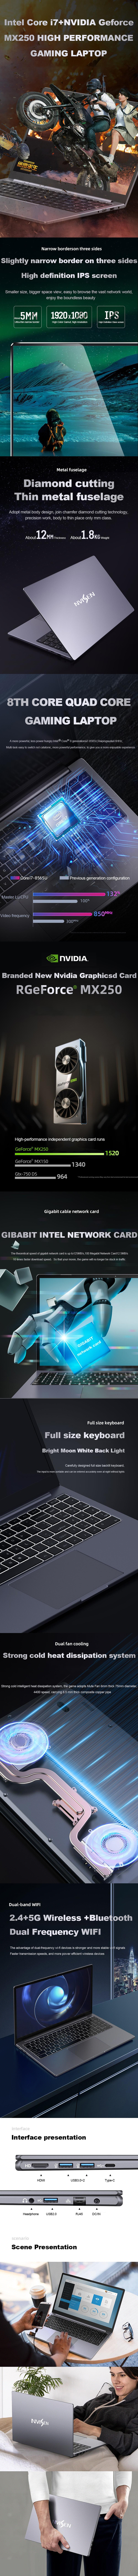 NVISEN Y-GLX253 15.6 inch Intel i7-8565U NVIDIA GeForce MX250 8GB 1TB SSD 5mm Narrow Bezel Backlit Notebook 12